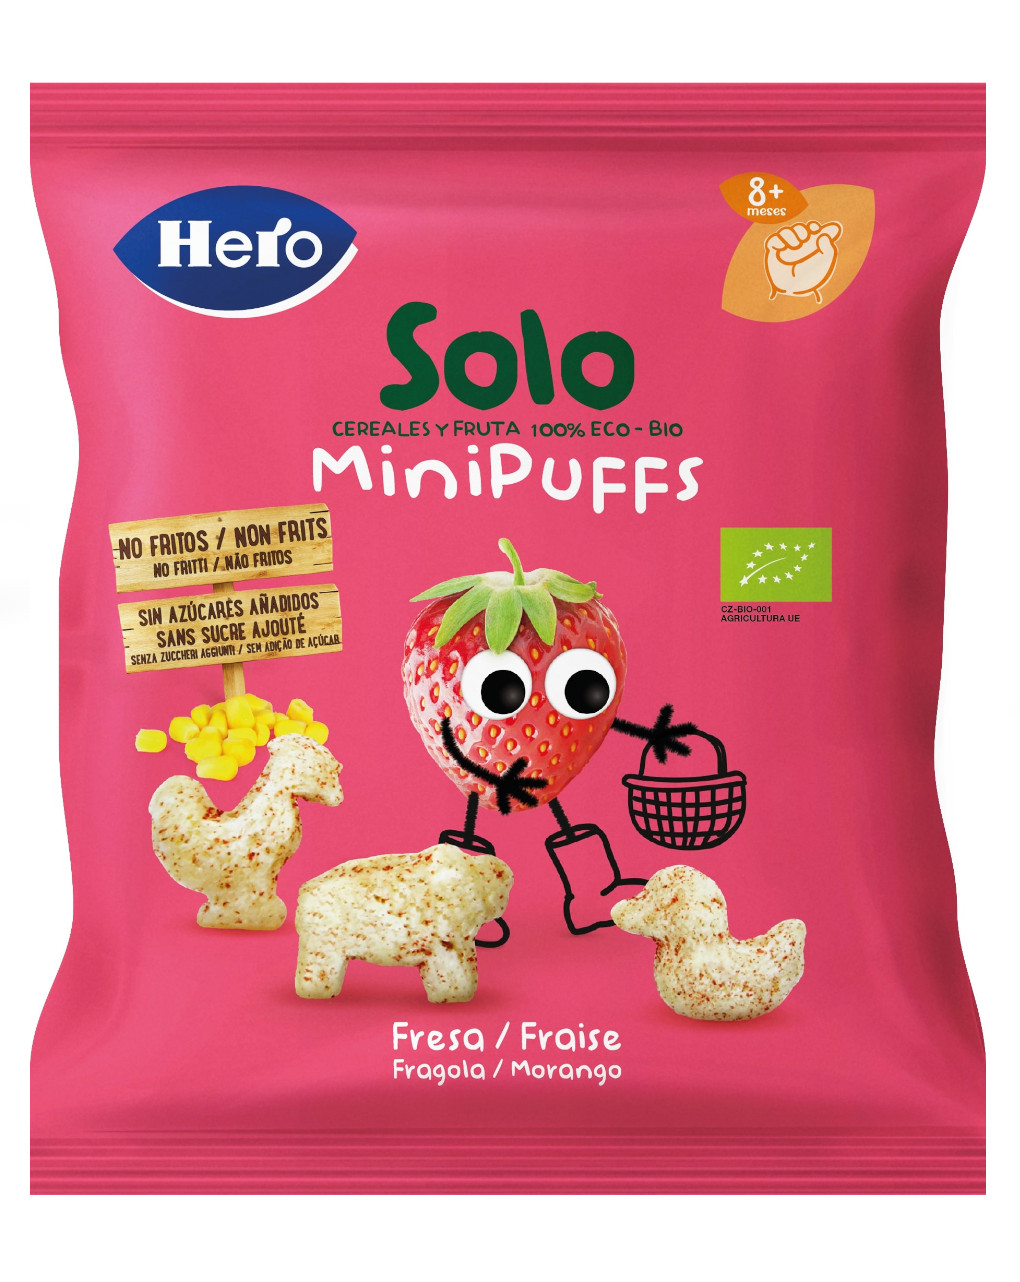 Minipuffs fragola 18 gr - hero solo